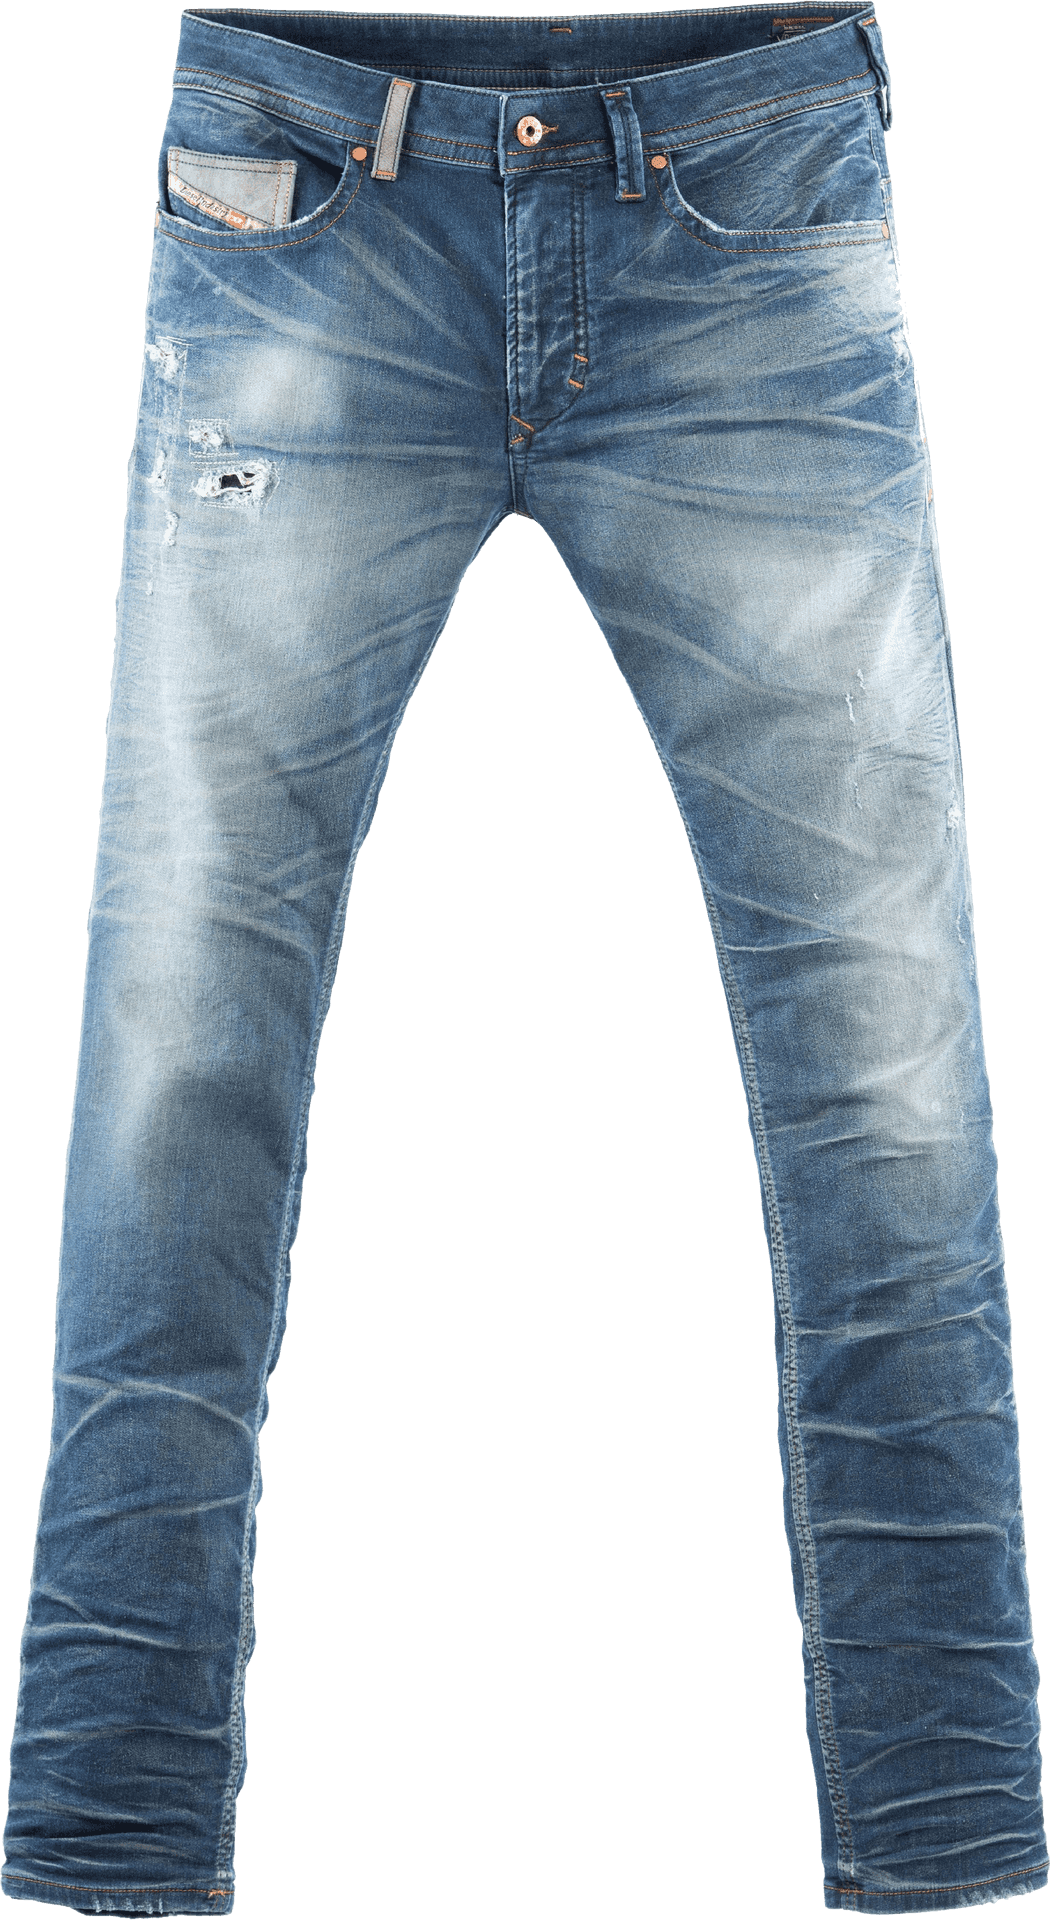 Distressed Blue Denim Jeans PNG image